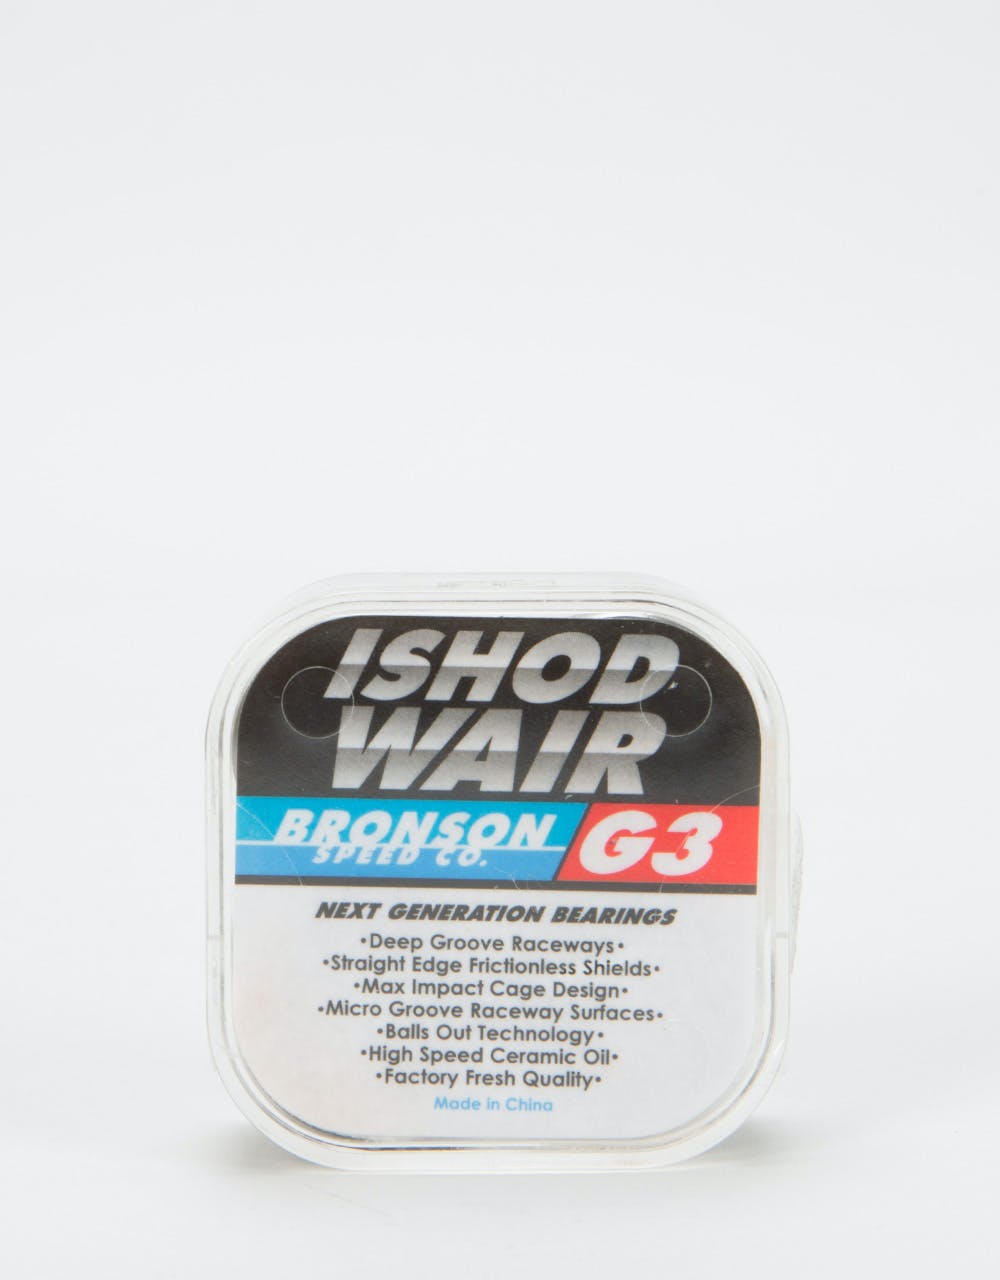 Bronson Speed Co. Ishod Pro G3 Bearings